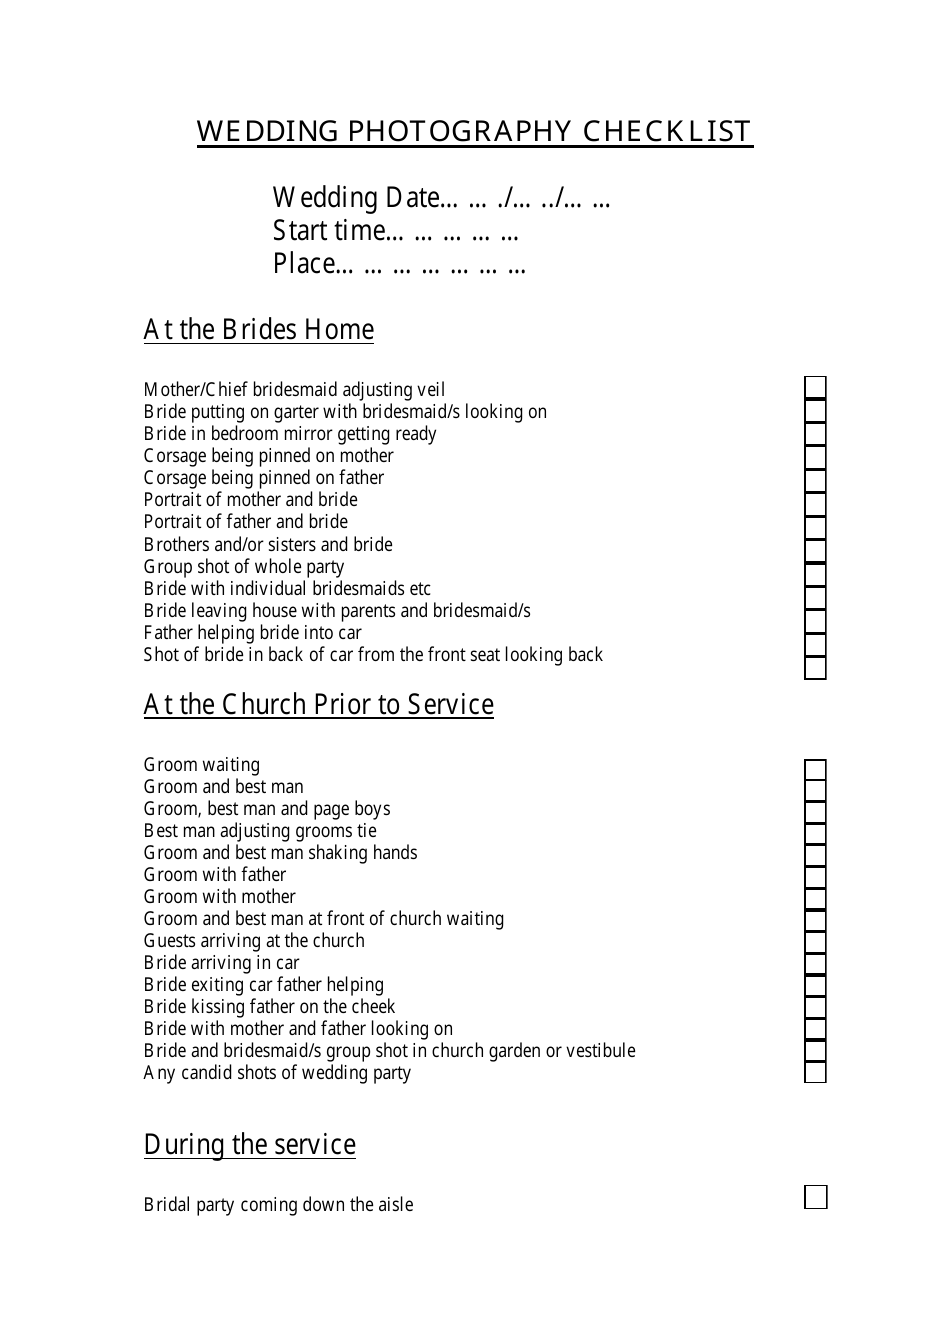 Wedding Photography Checklist- Blank document template